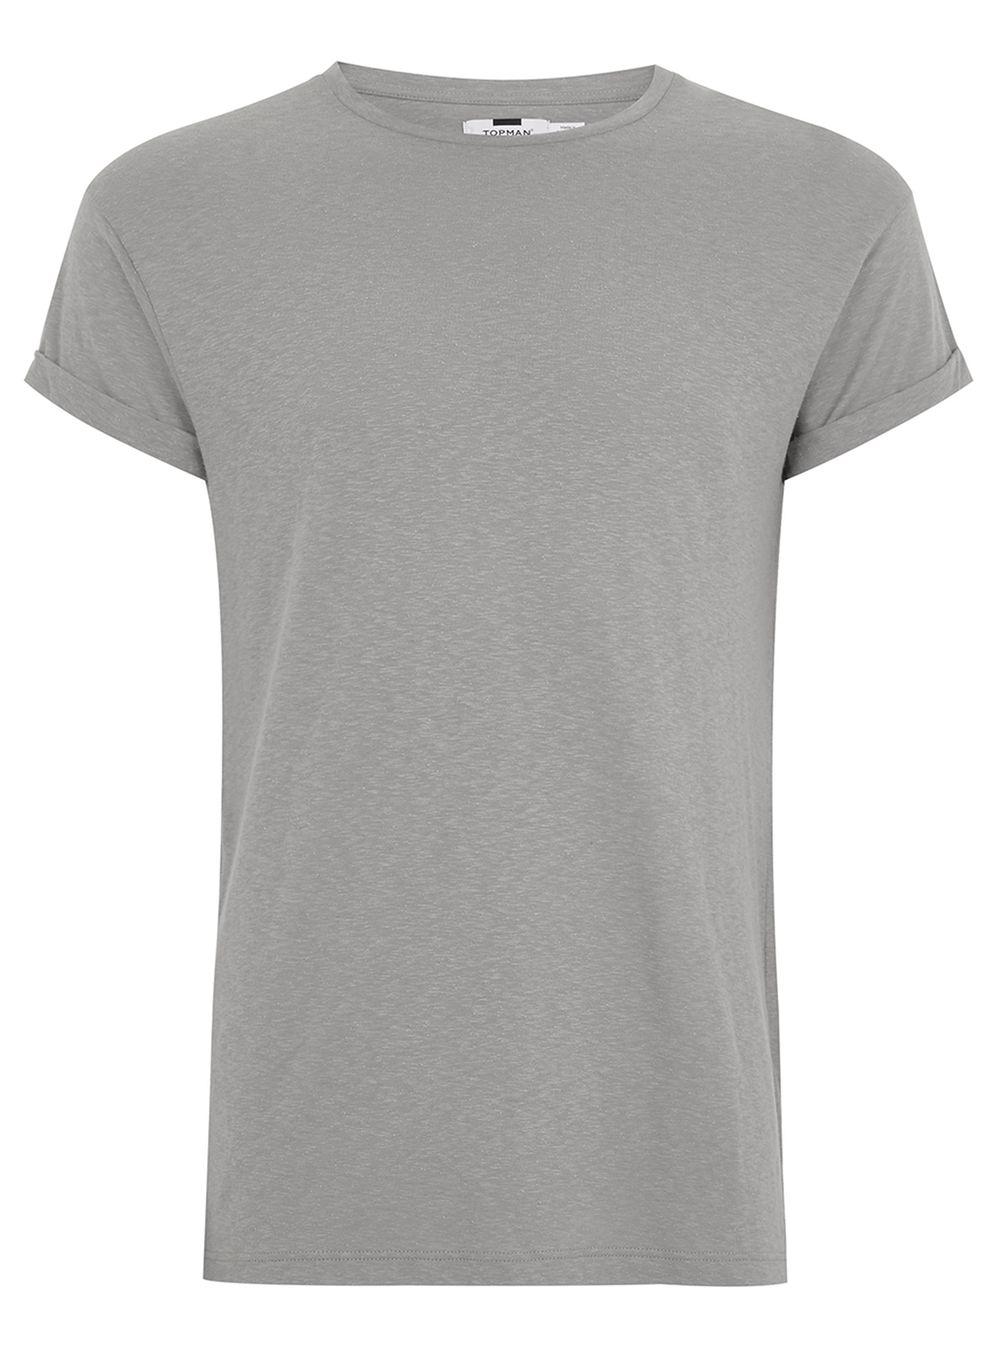 TOPMAN Grey Linen Look Muscle T-shirt in Gray for Men - Lyst